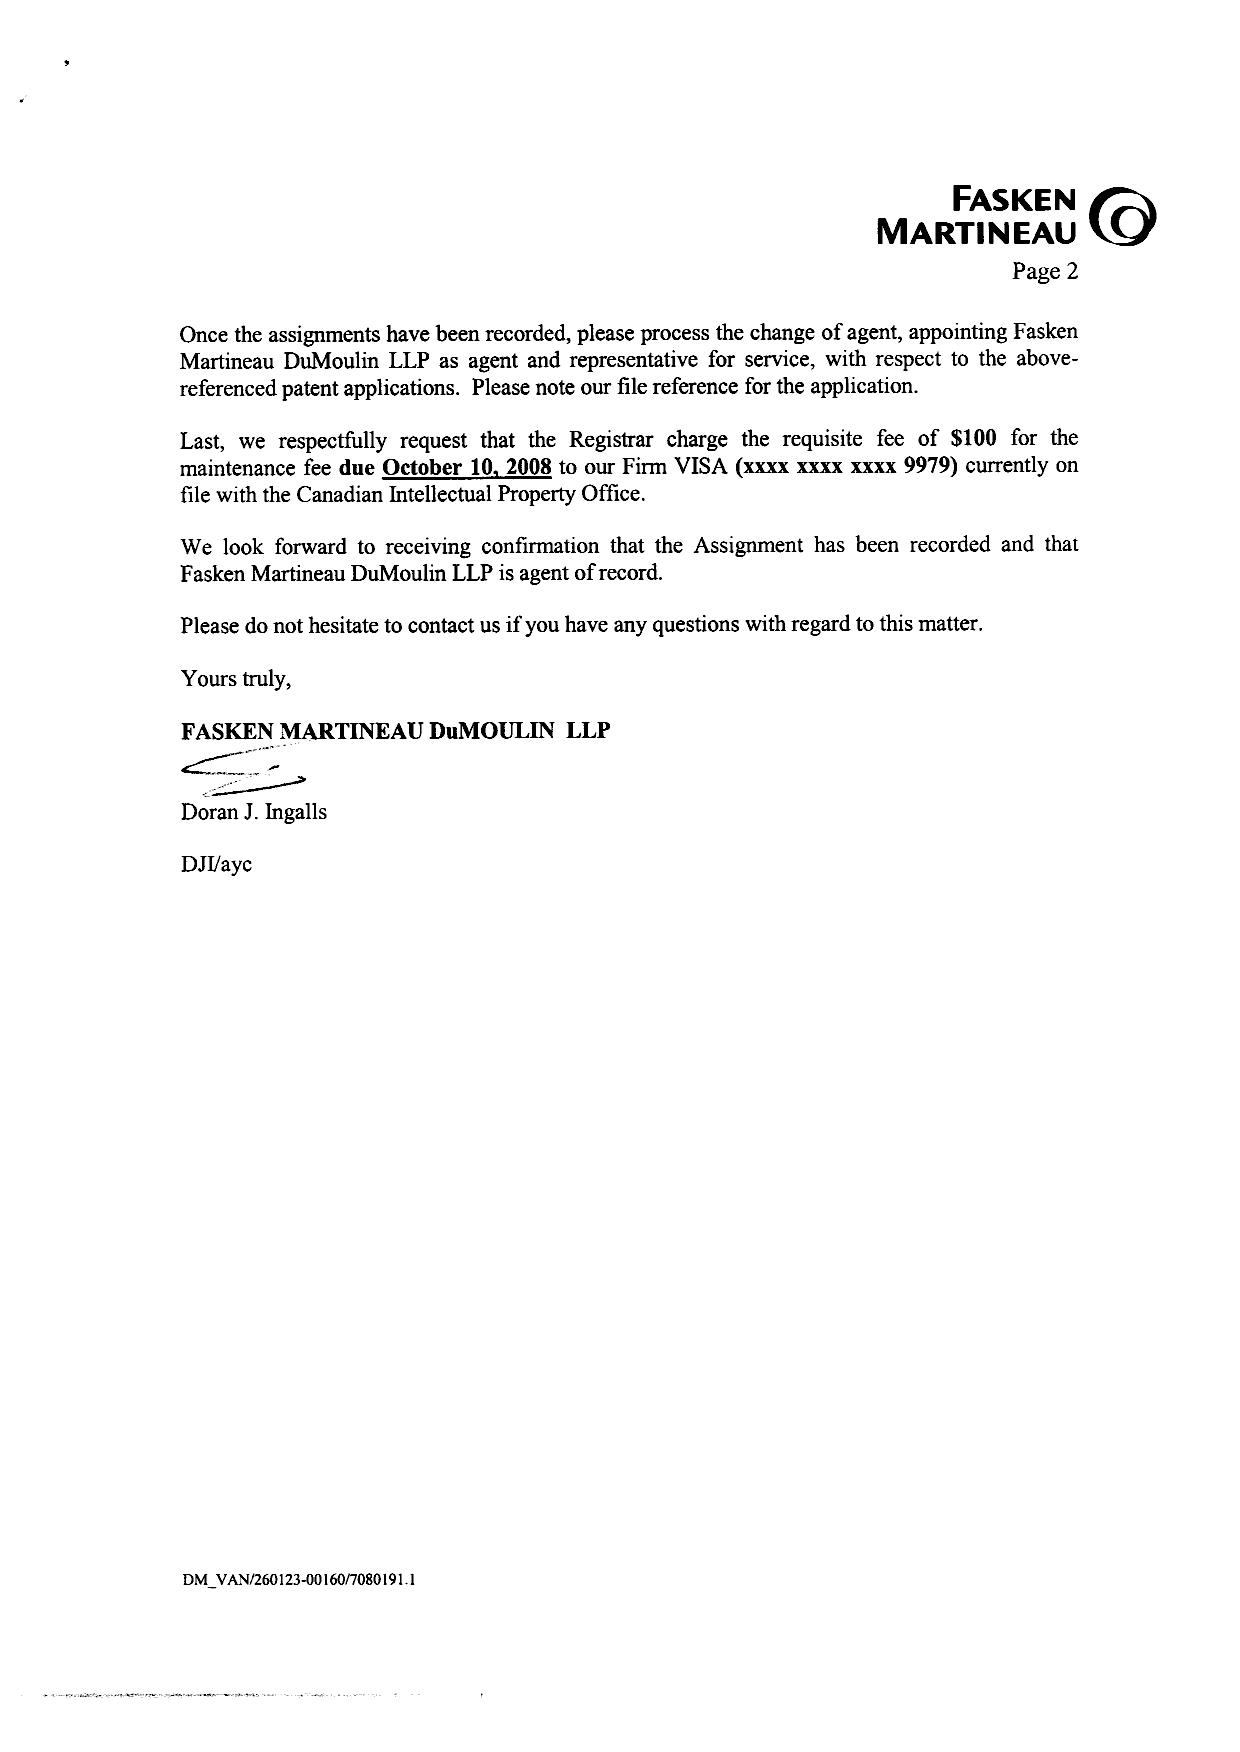 Canadian Patent Document 2115859. Correspondence 20081010. Image 2 of 5